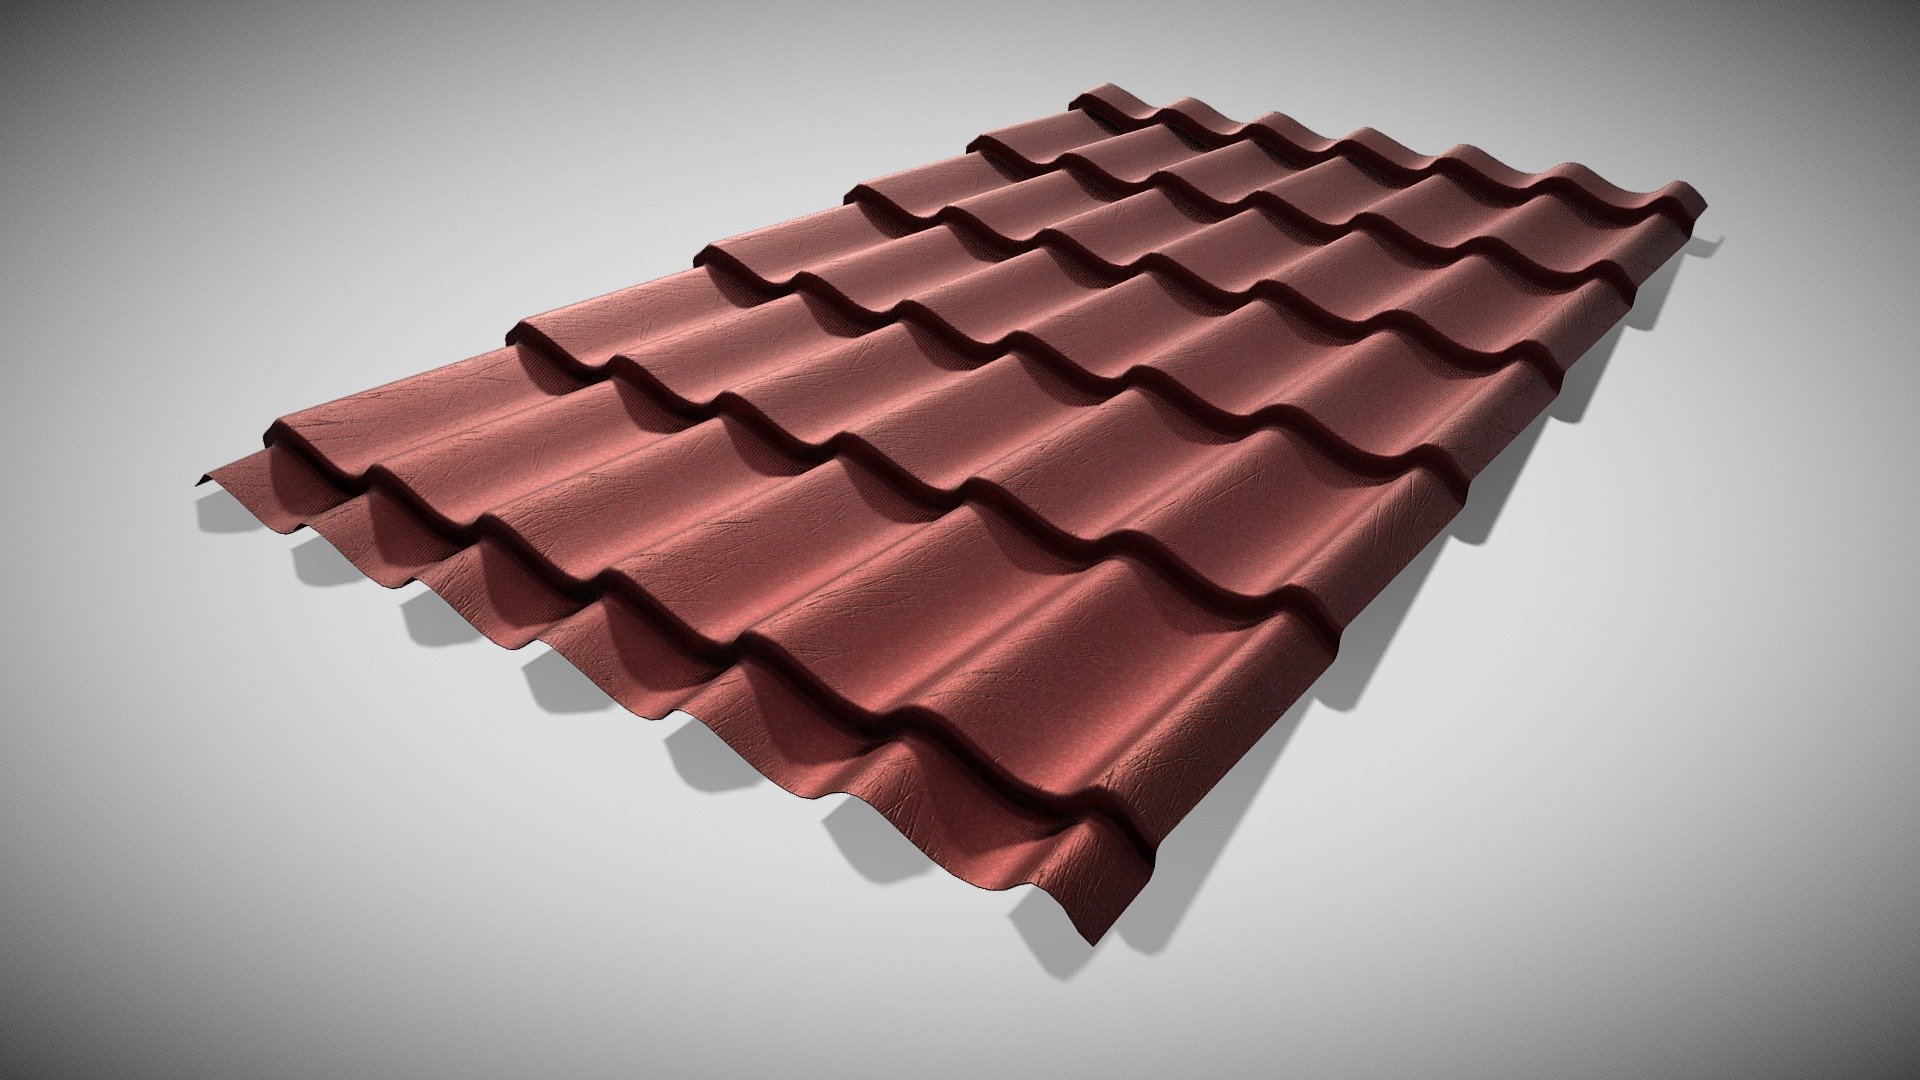 Alexxa european cherry red tile metal roofing.
model is subdividable.
Enjoy! - Alexxa cherry red tile metal roofing panel - Download Free 3D model by biserborislawow 3d model